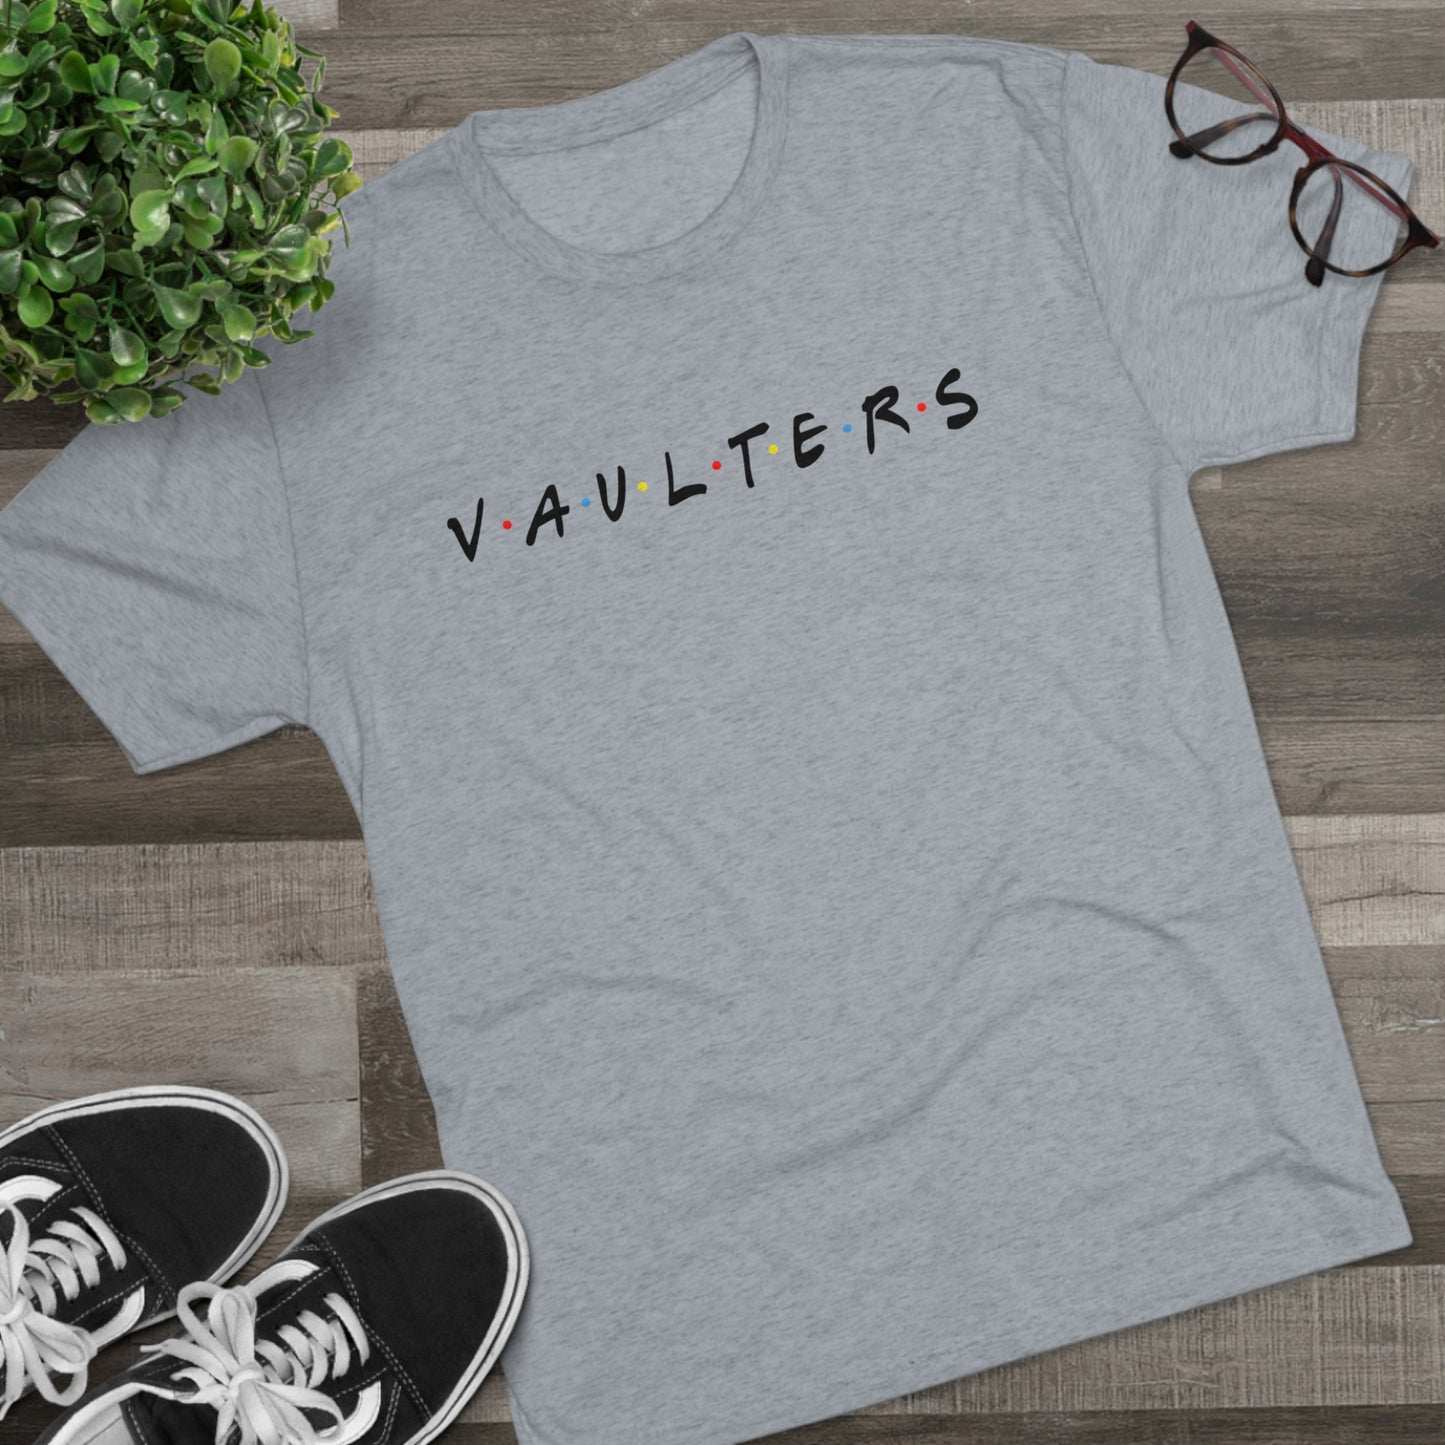 Vaulters - Tri-Blend Tee